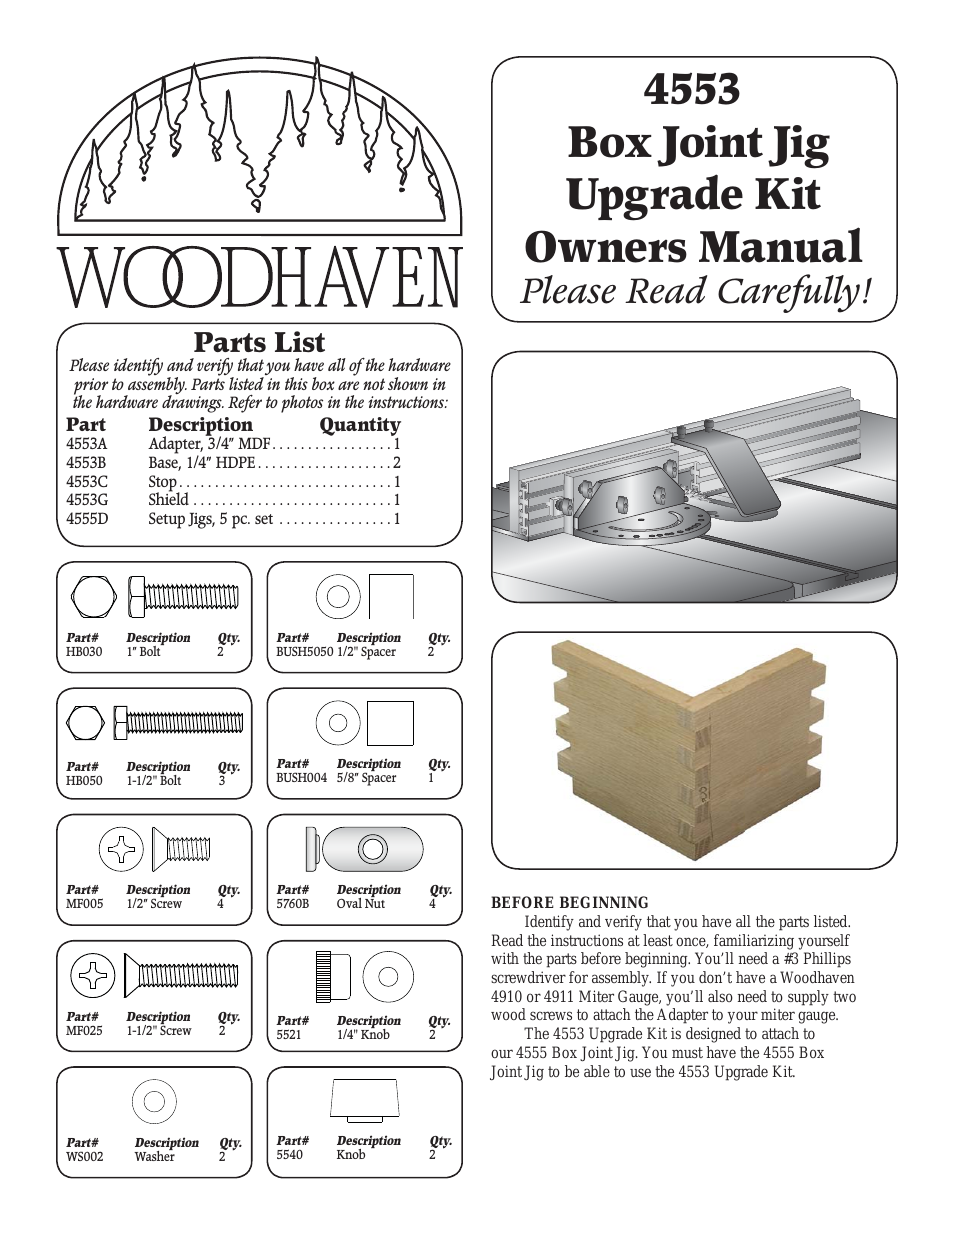 4553: Box Joint Jig Upgrade Kit